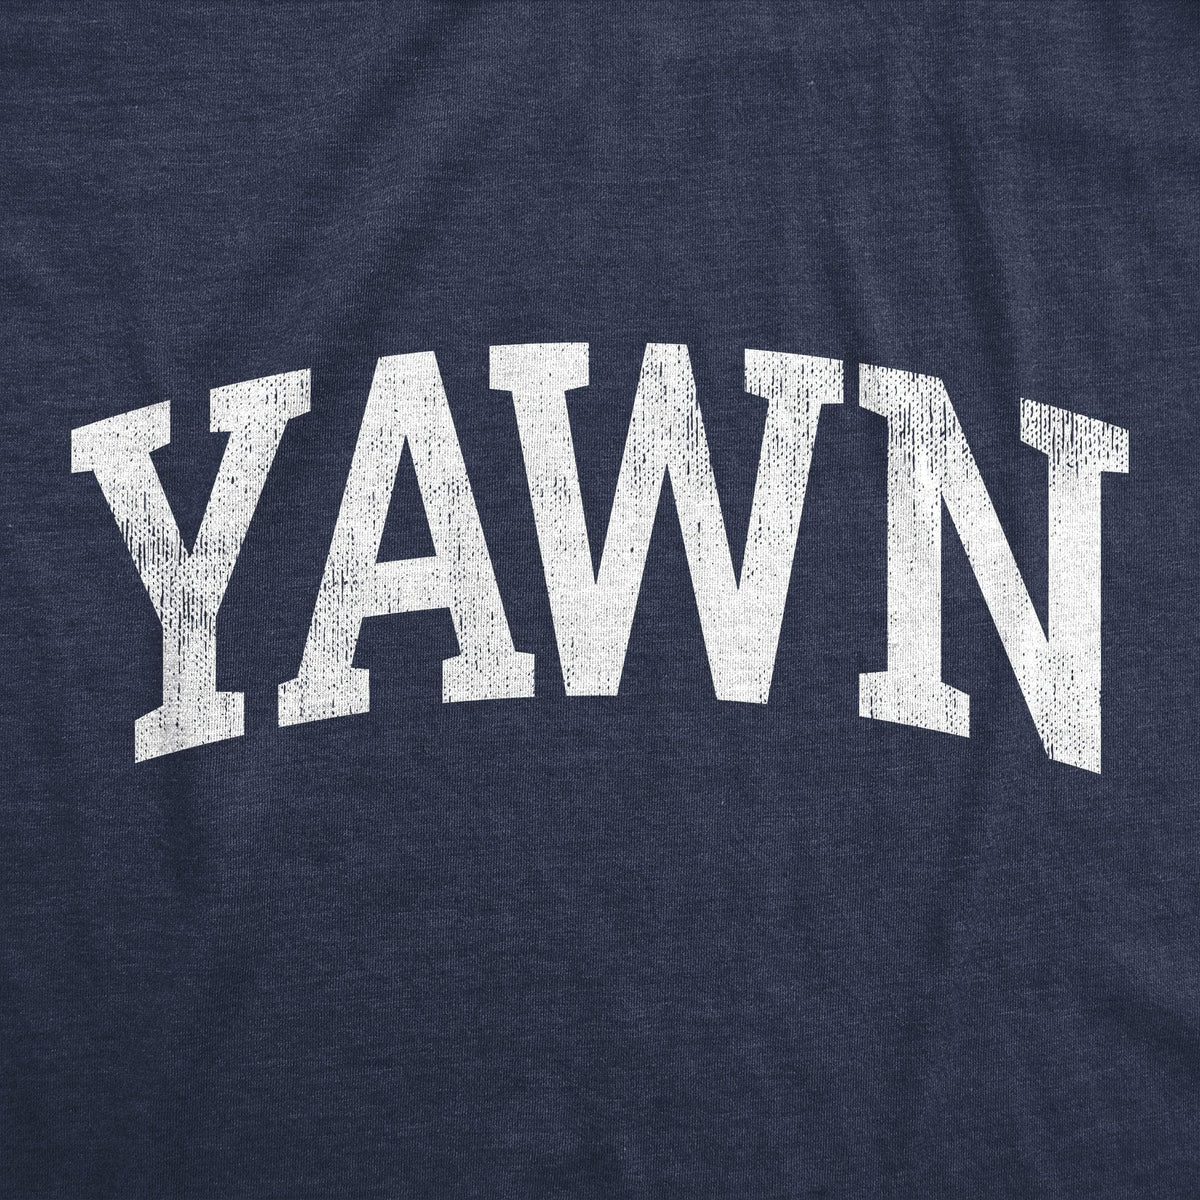 Yawn Men&#39;s Tshirt  -  Crazy Dog T-Shirts